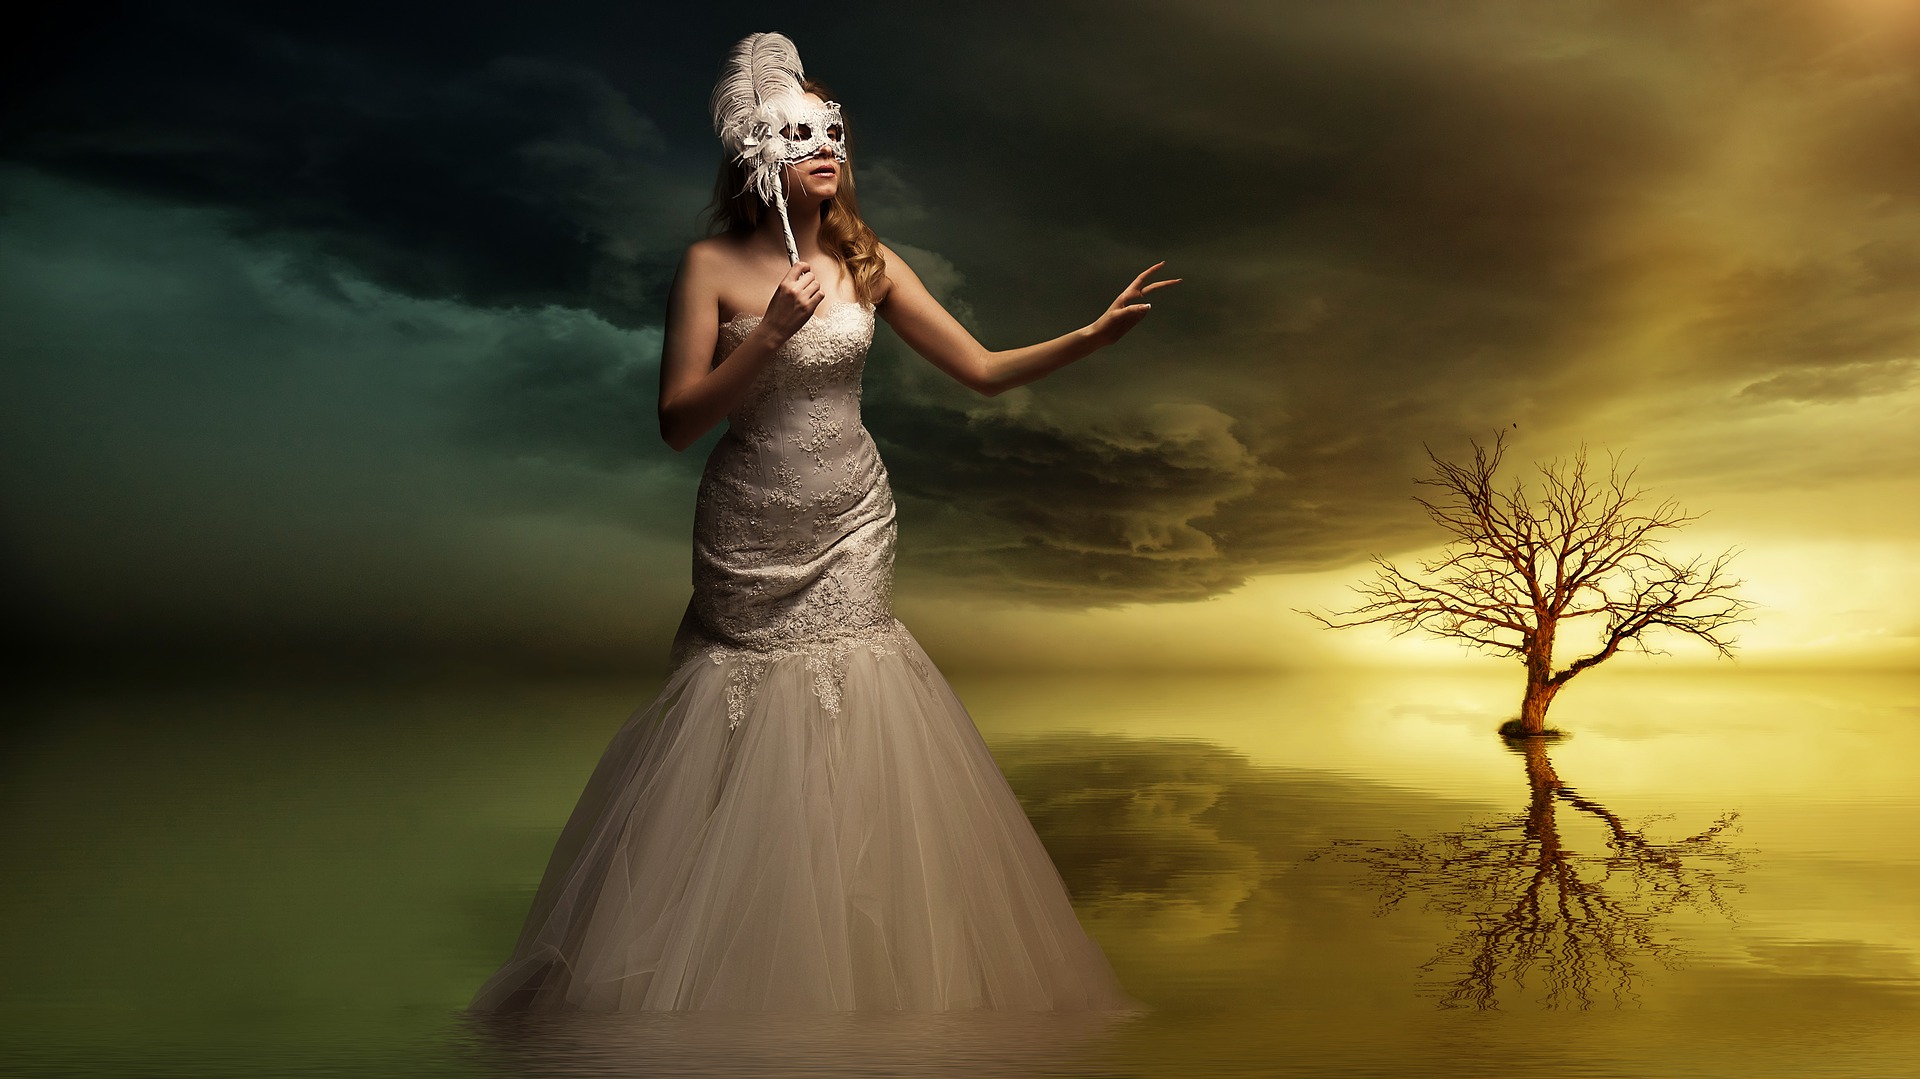 Gothic woman, fantasy, tree, mask